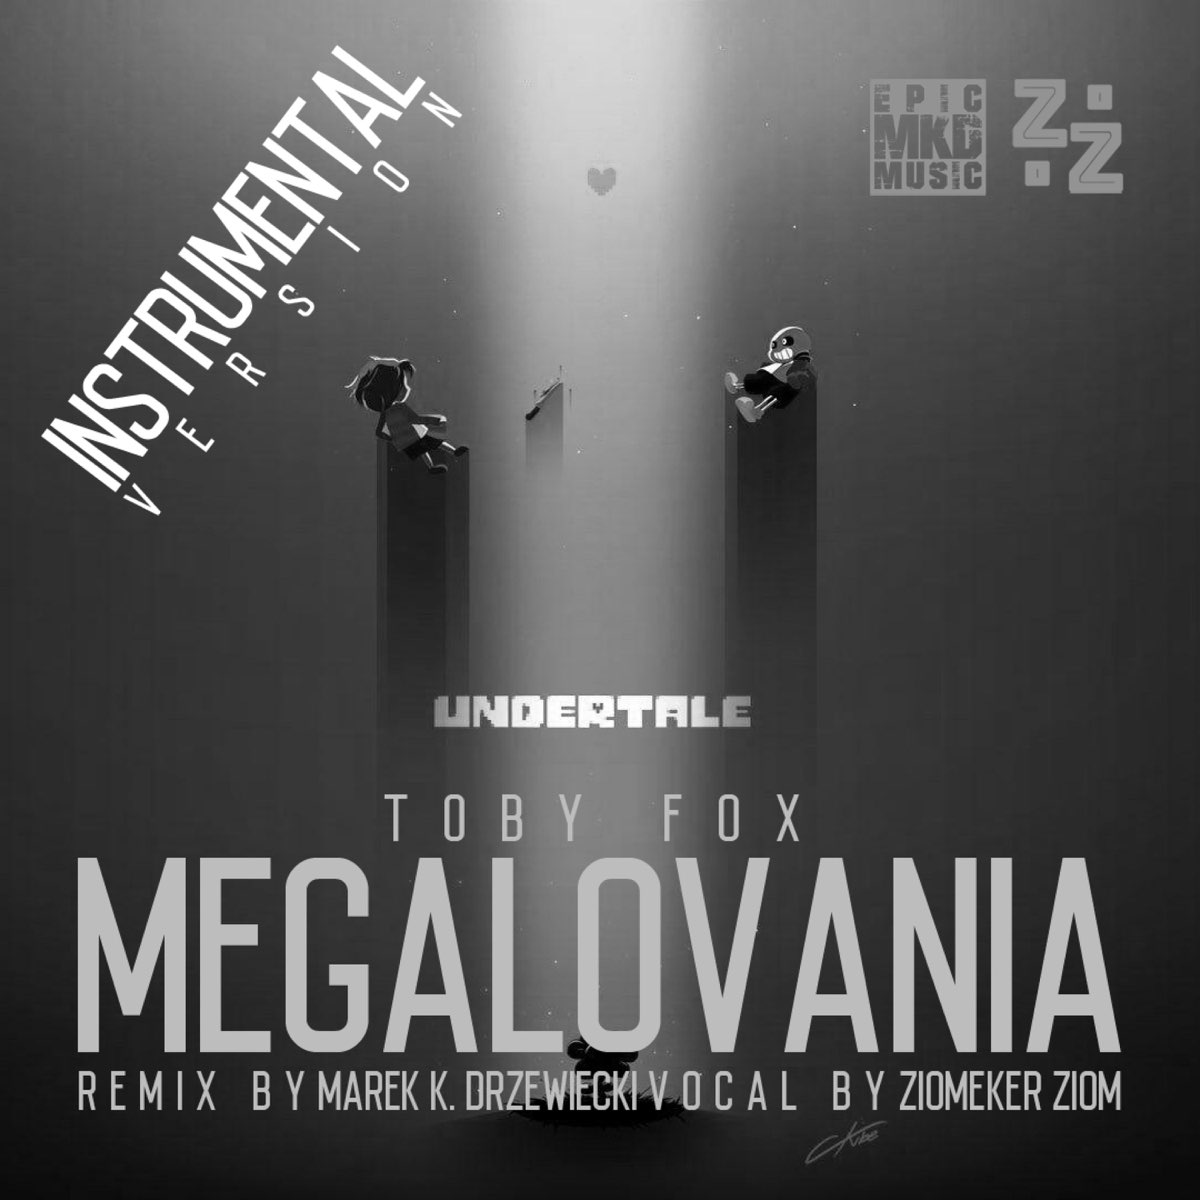 Megalovania [Instrumental] [Remix] - Single by Marek K. Drzewiecki &  Ziomeker Ziom on Apple Music